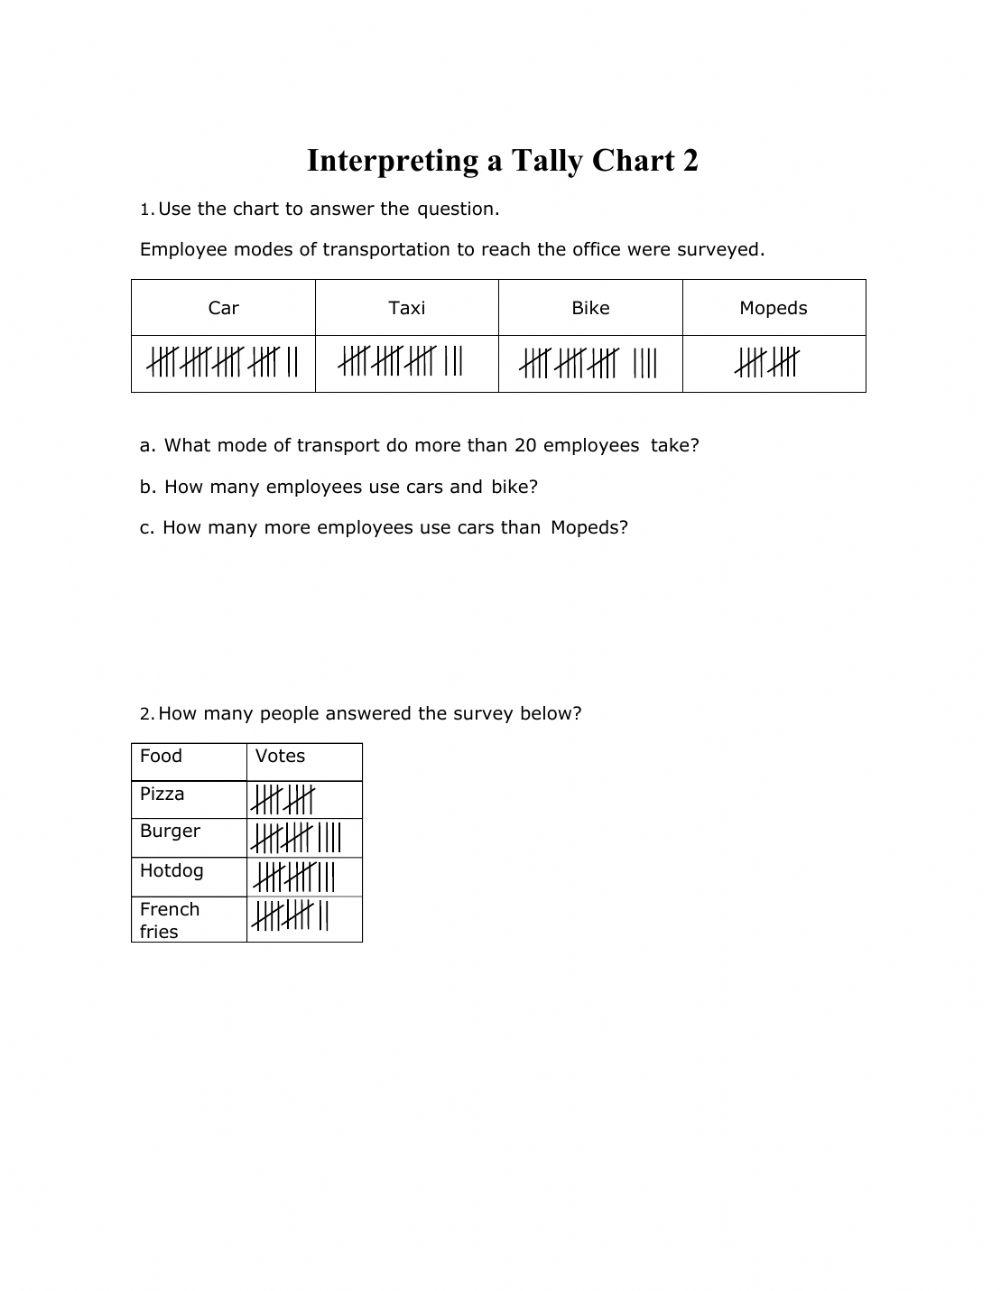 MA2-Wednesday (Interpreting a tally chart 2)